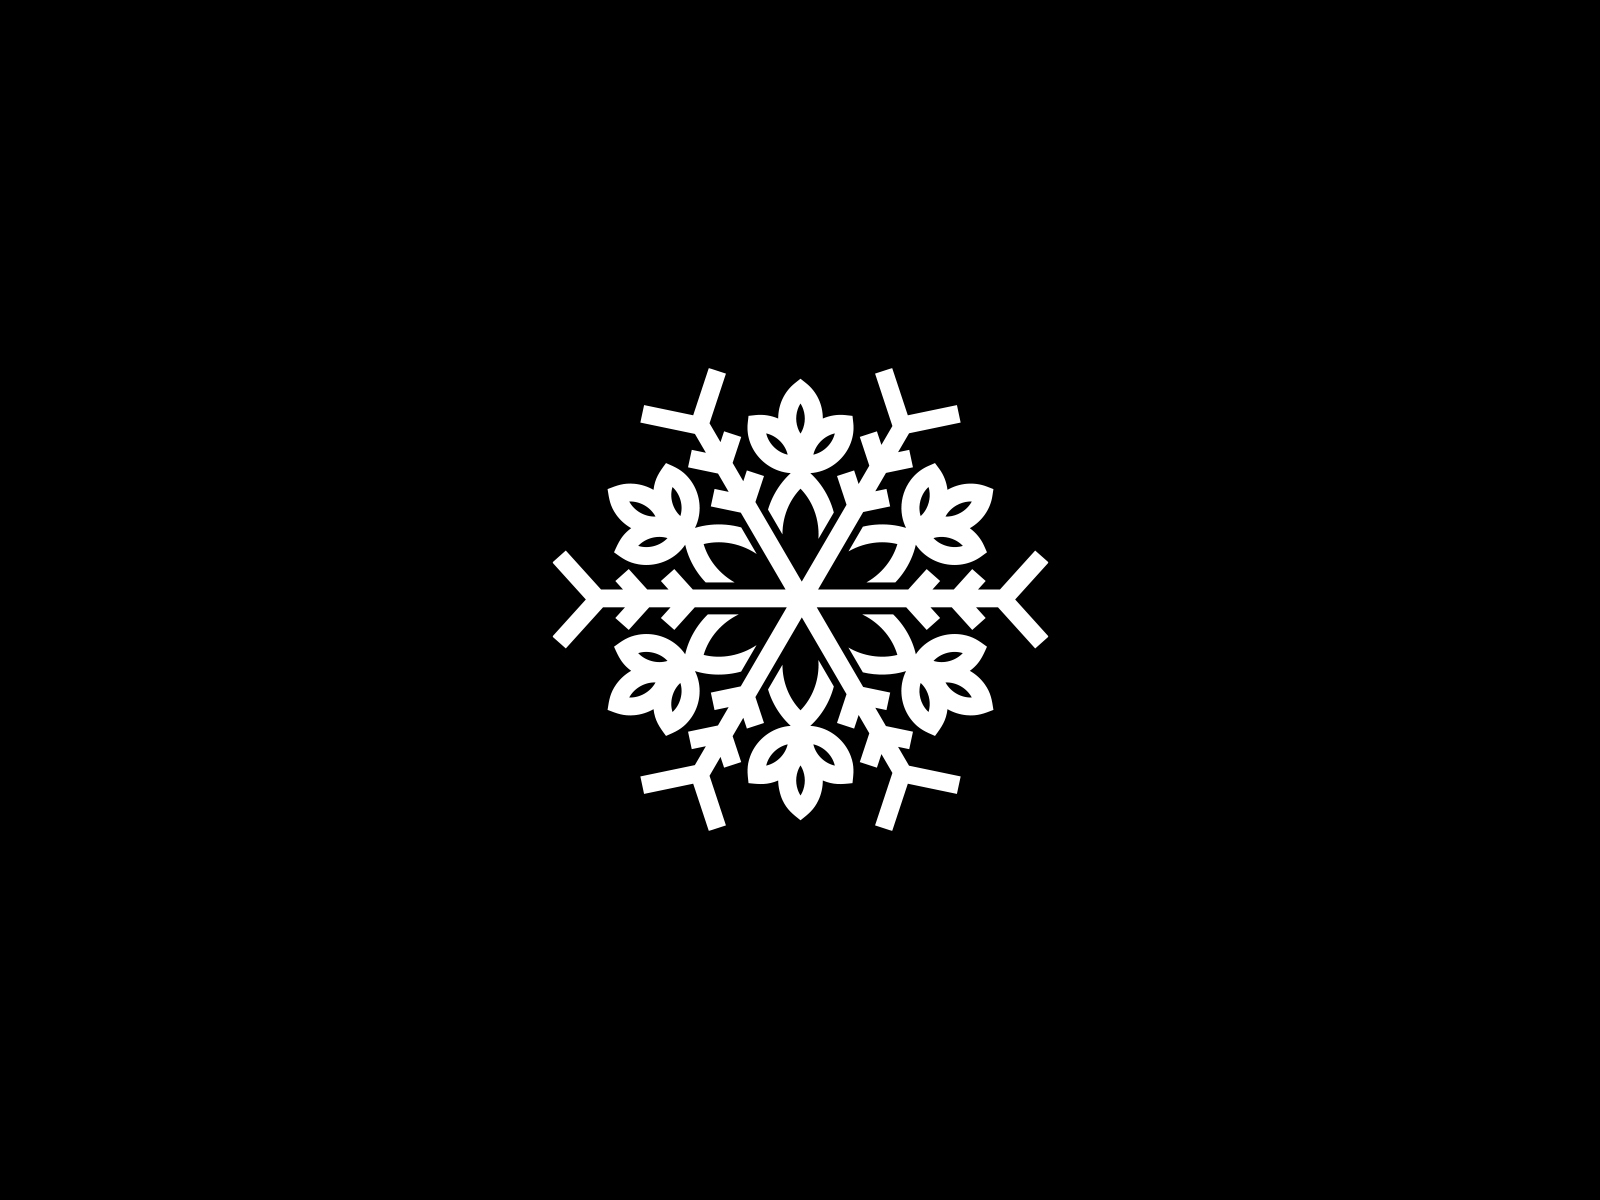 Neat Snow Logo Snowflake Flower by Djjeep_Design on Dribbble